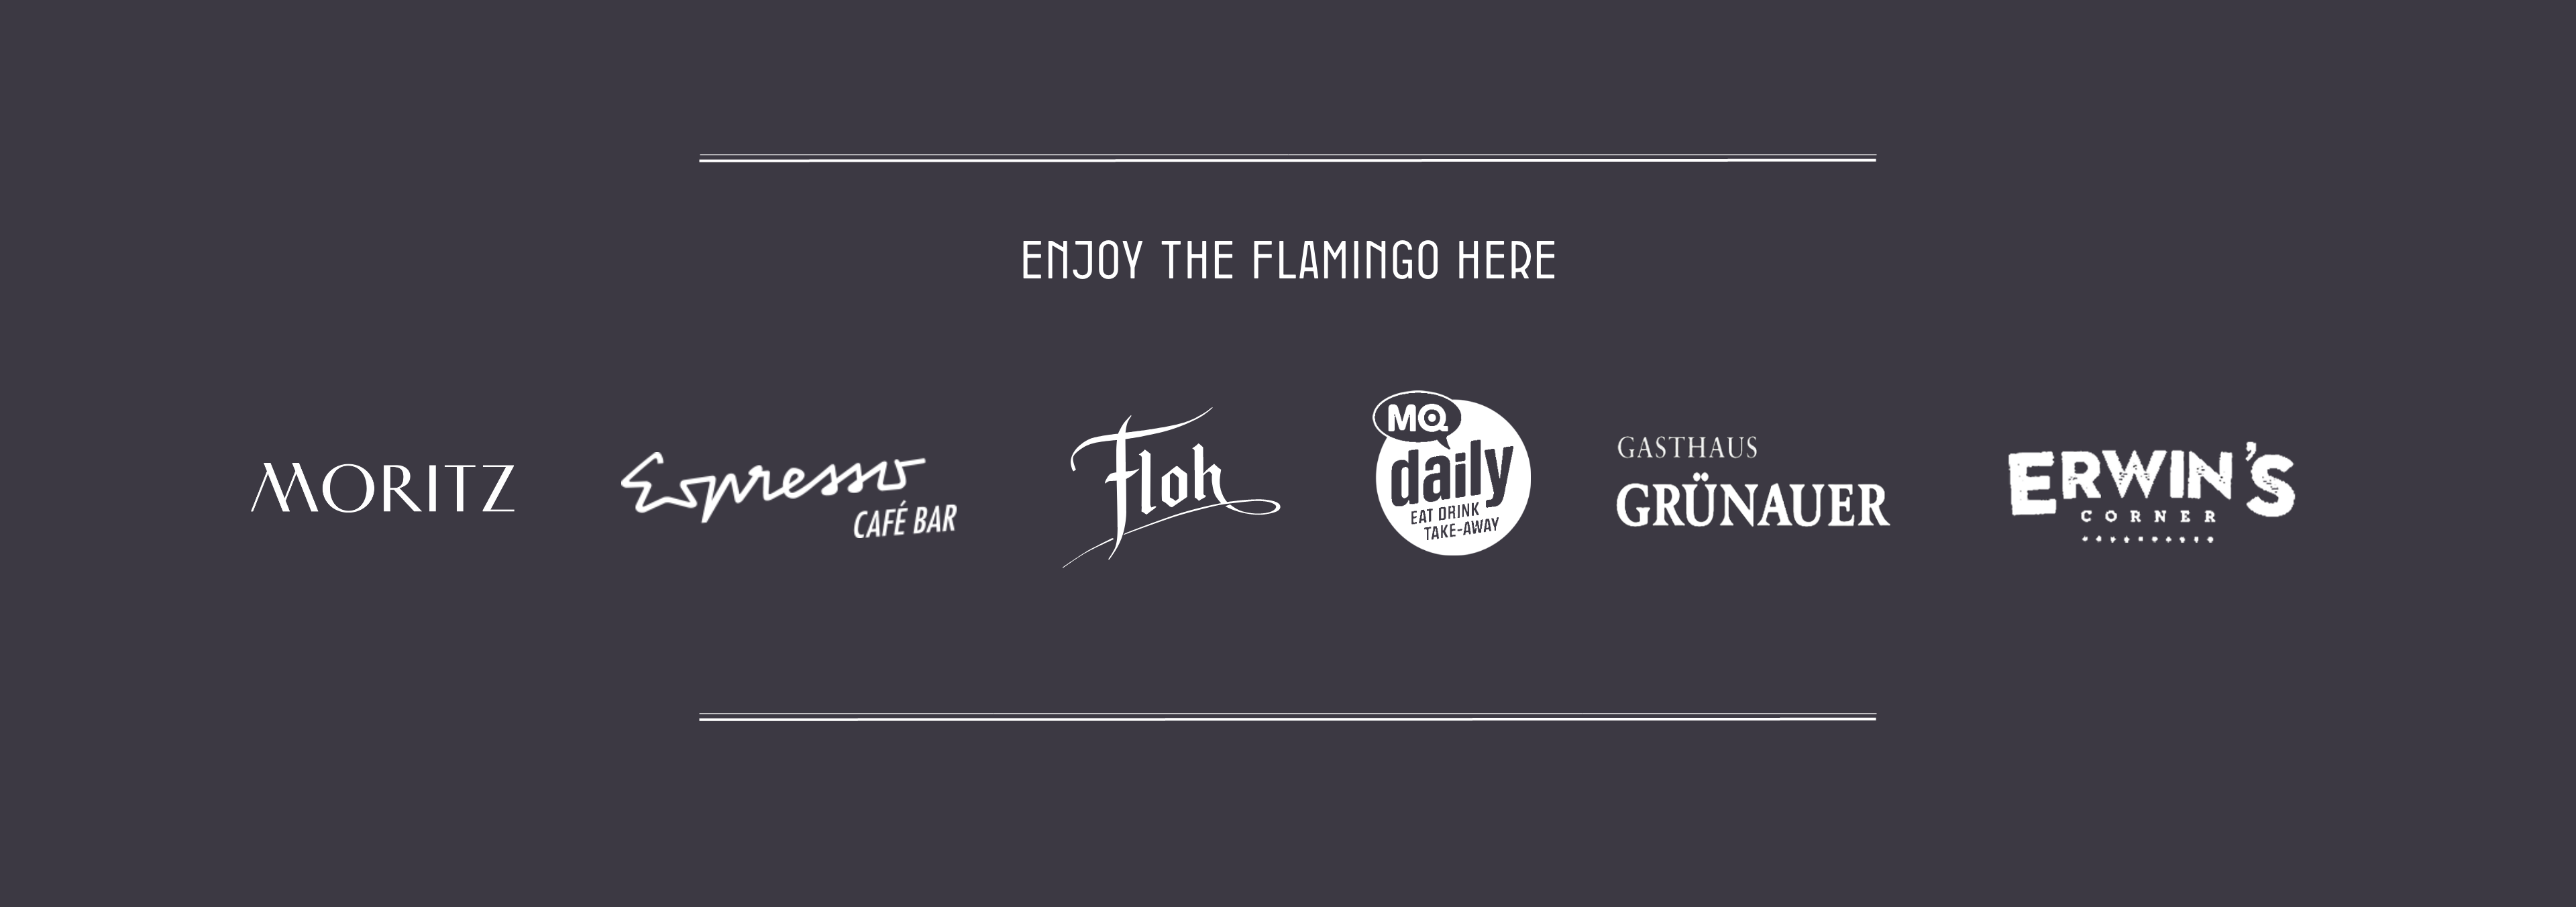 Enjoy the Black Flamingo here: Moritz, Espresso Burggasse, Floh Langenlehbarn, MQ Daily, Gasthaus Grünauer, Erwin’s Corner